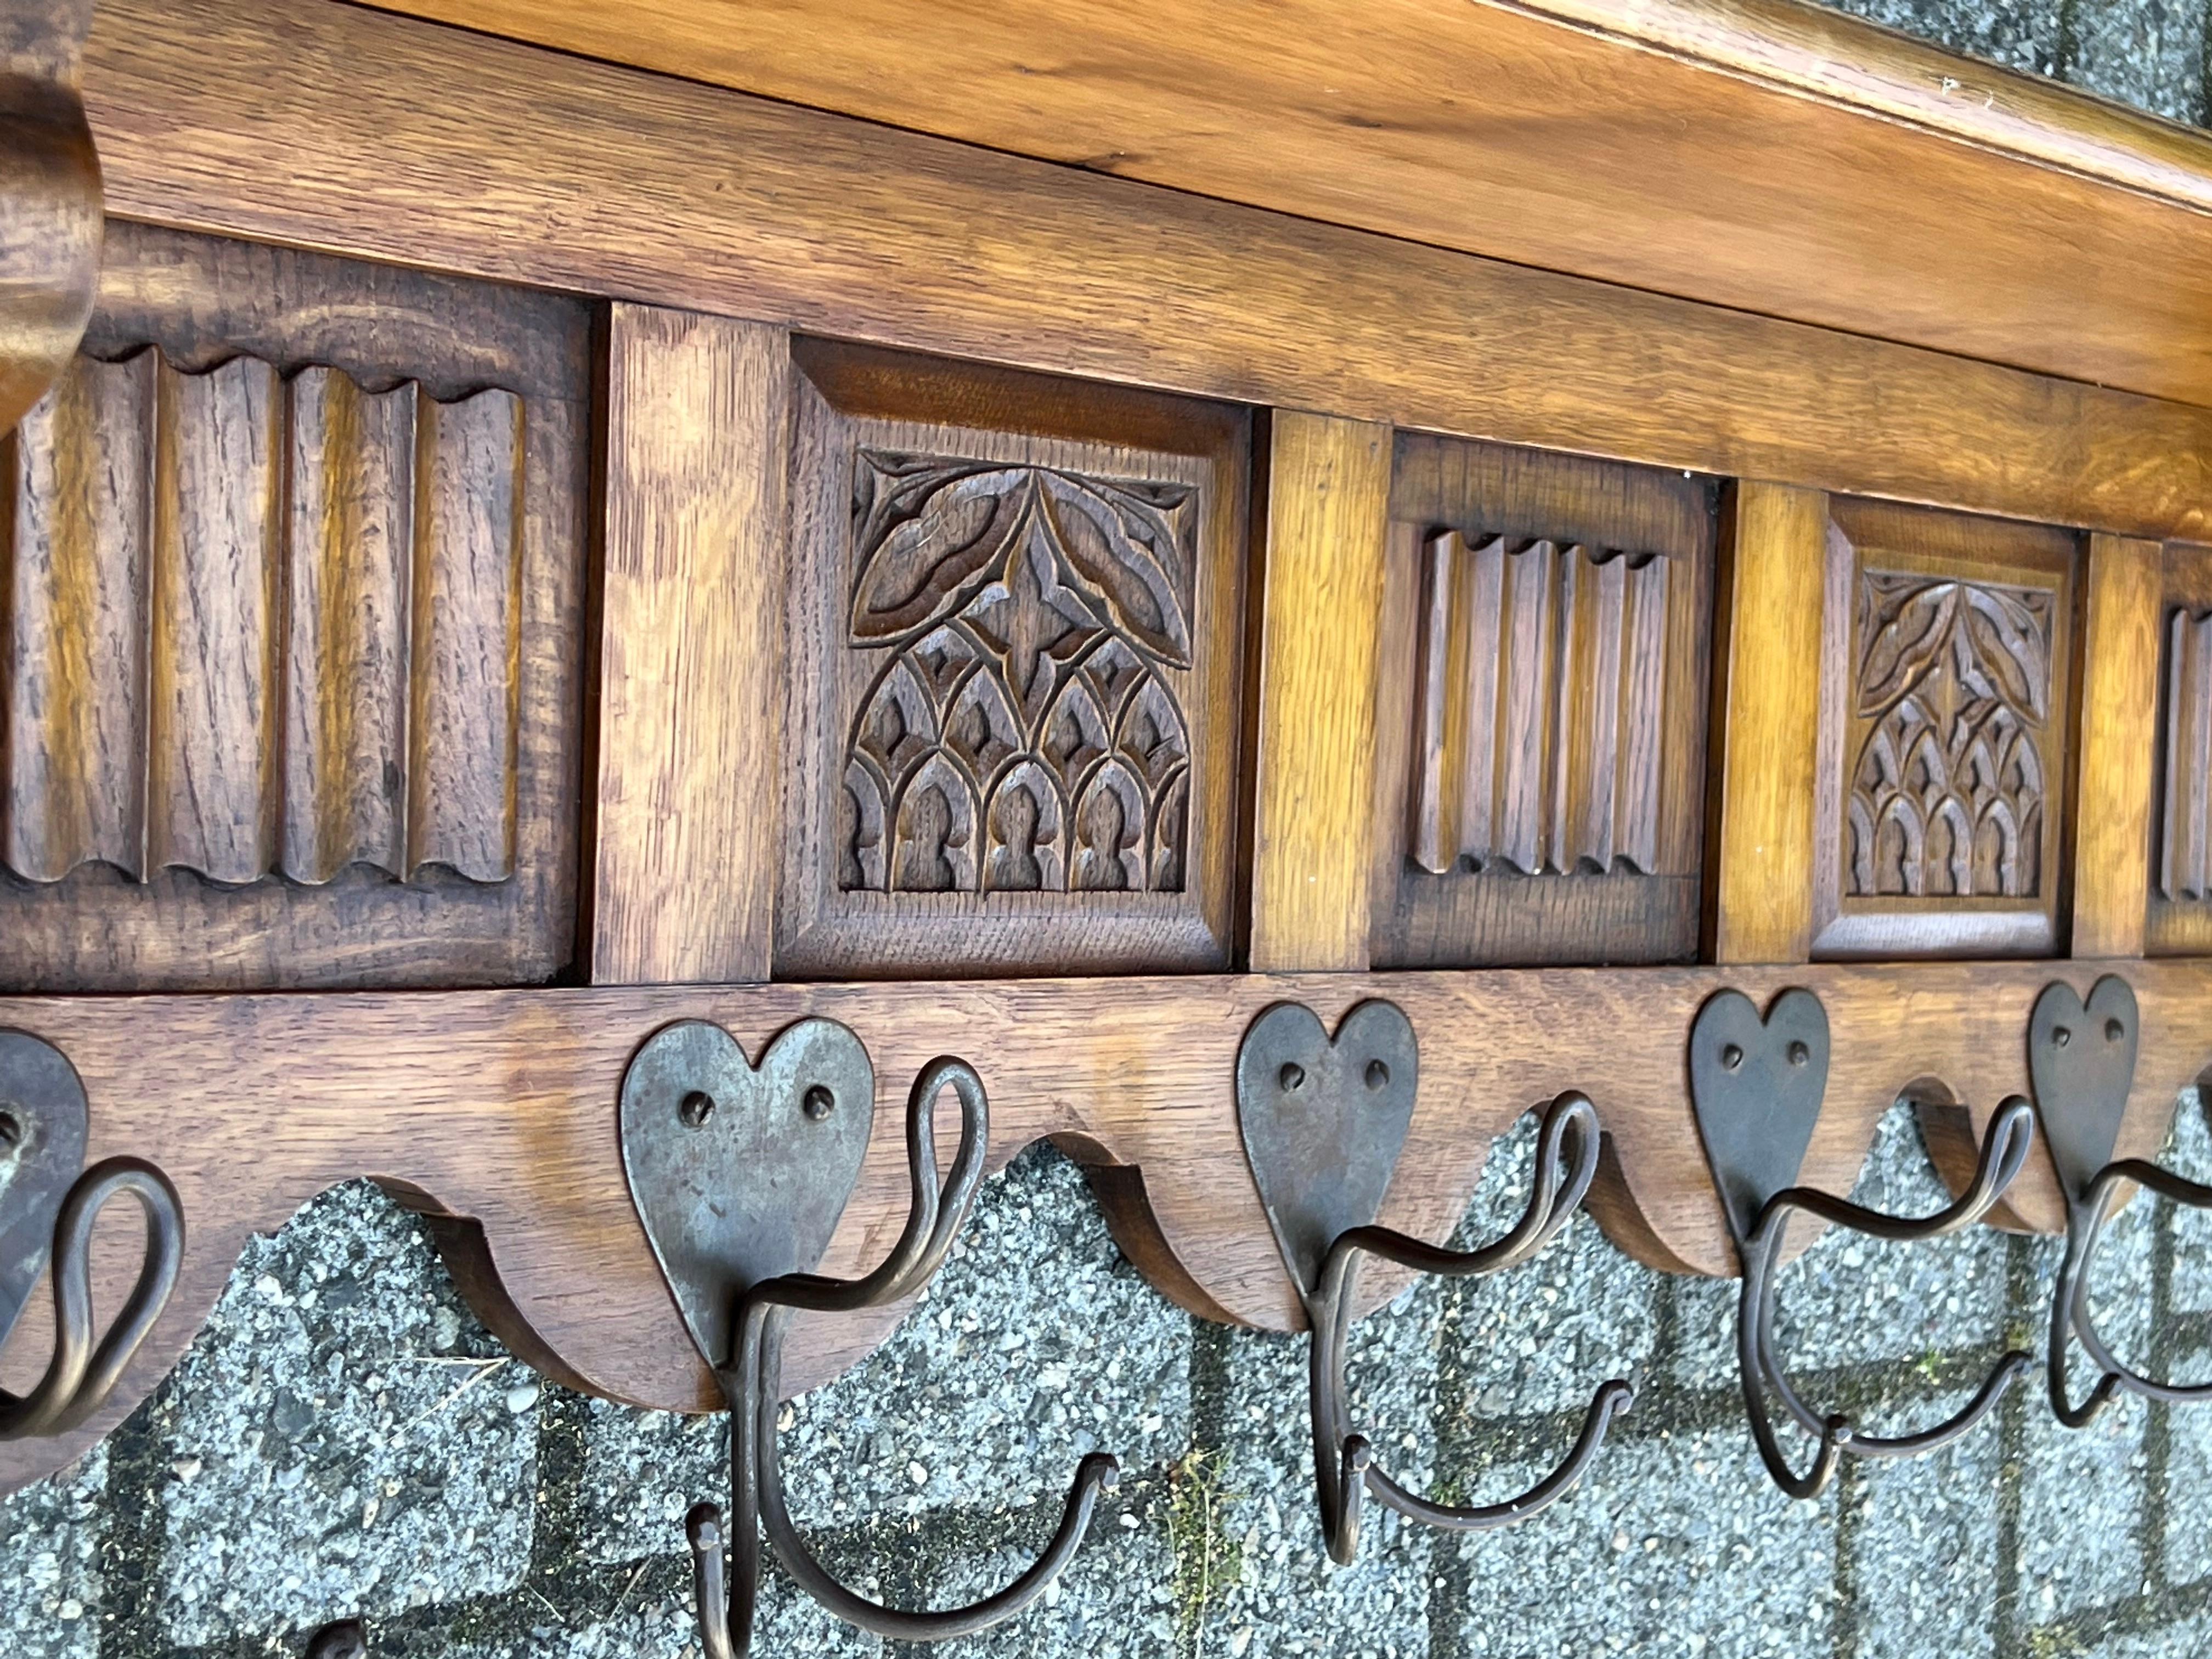 Gothic Revival Oak Wall Coat Rack wirh Stylish Church Window Panels & Iron Hooks 8